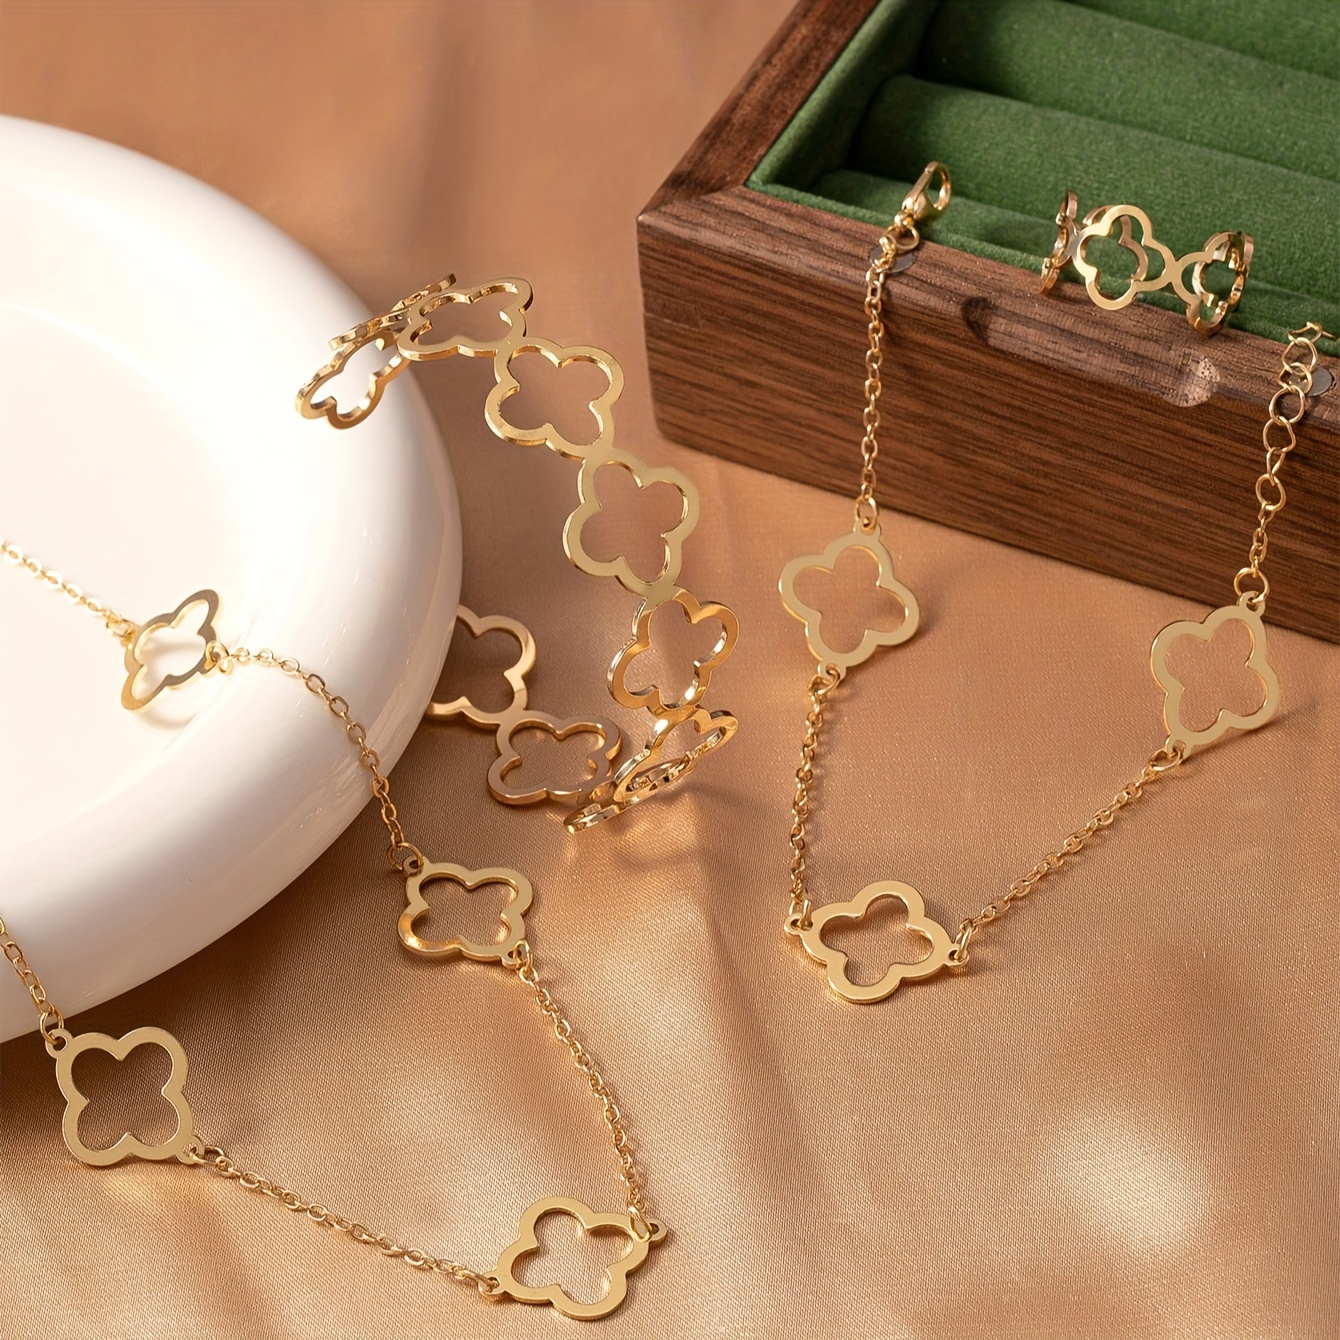 

Elegant Geometric Openwork Clover Pendant Necklace And Bracelet Set, Vintage European Style Adjustable Ring, Hollow Clover Bangle, Charm Chain For Women - Golden Jewelry Set